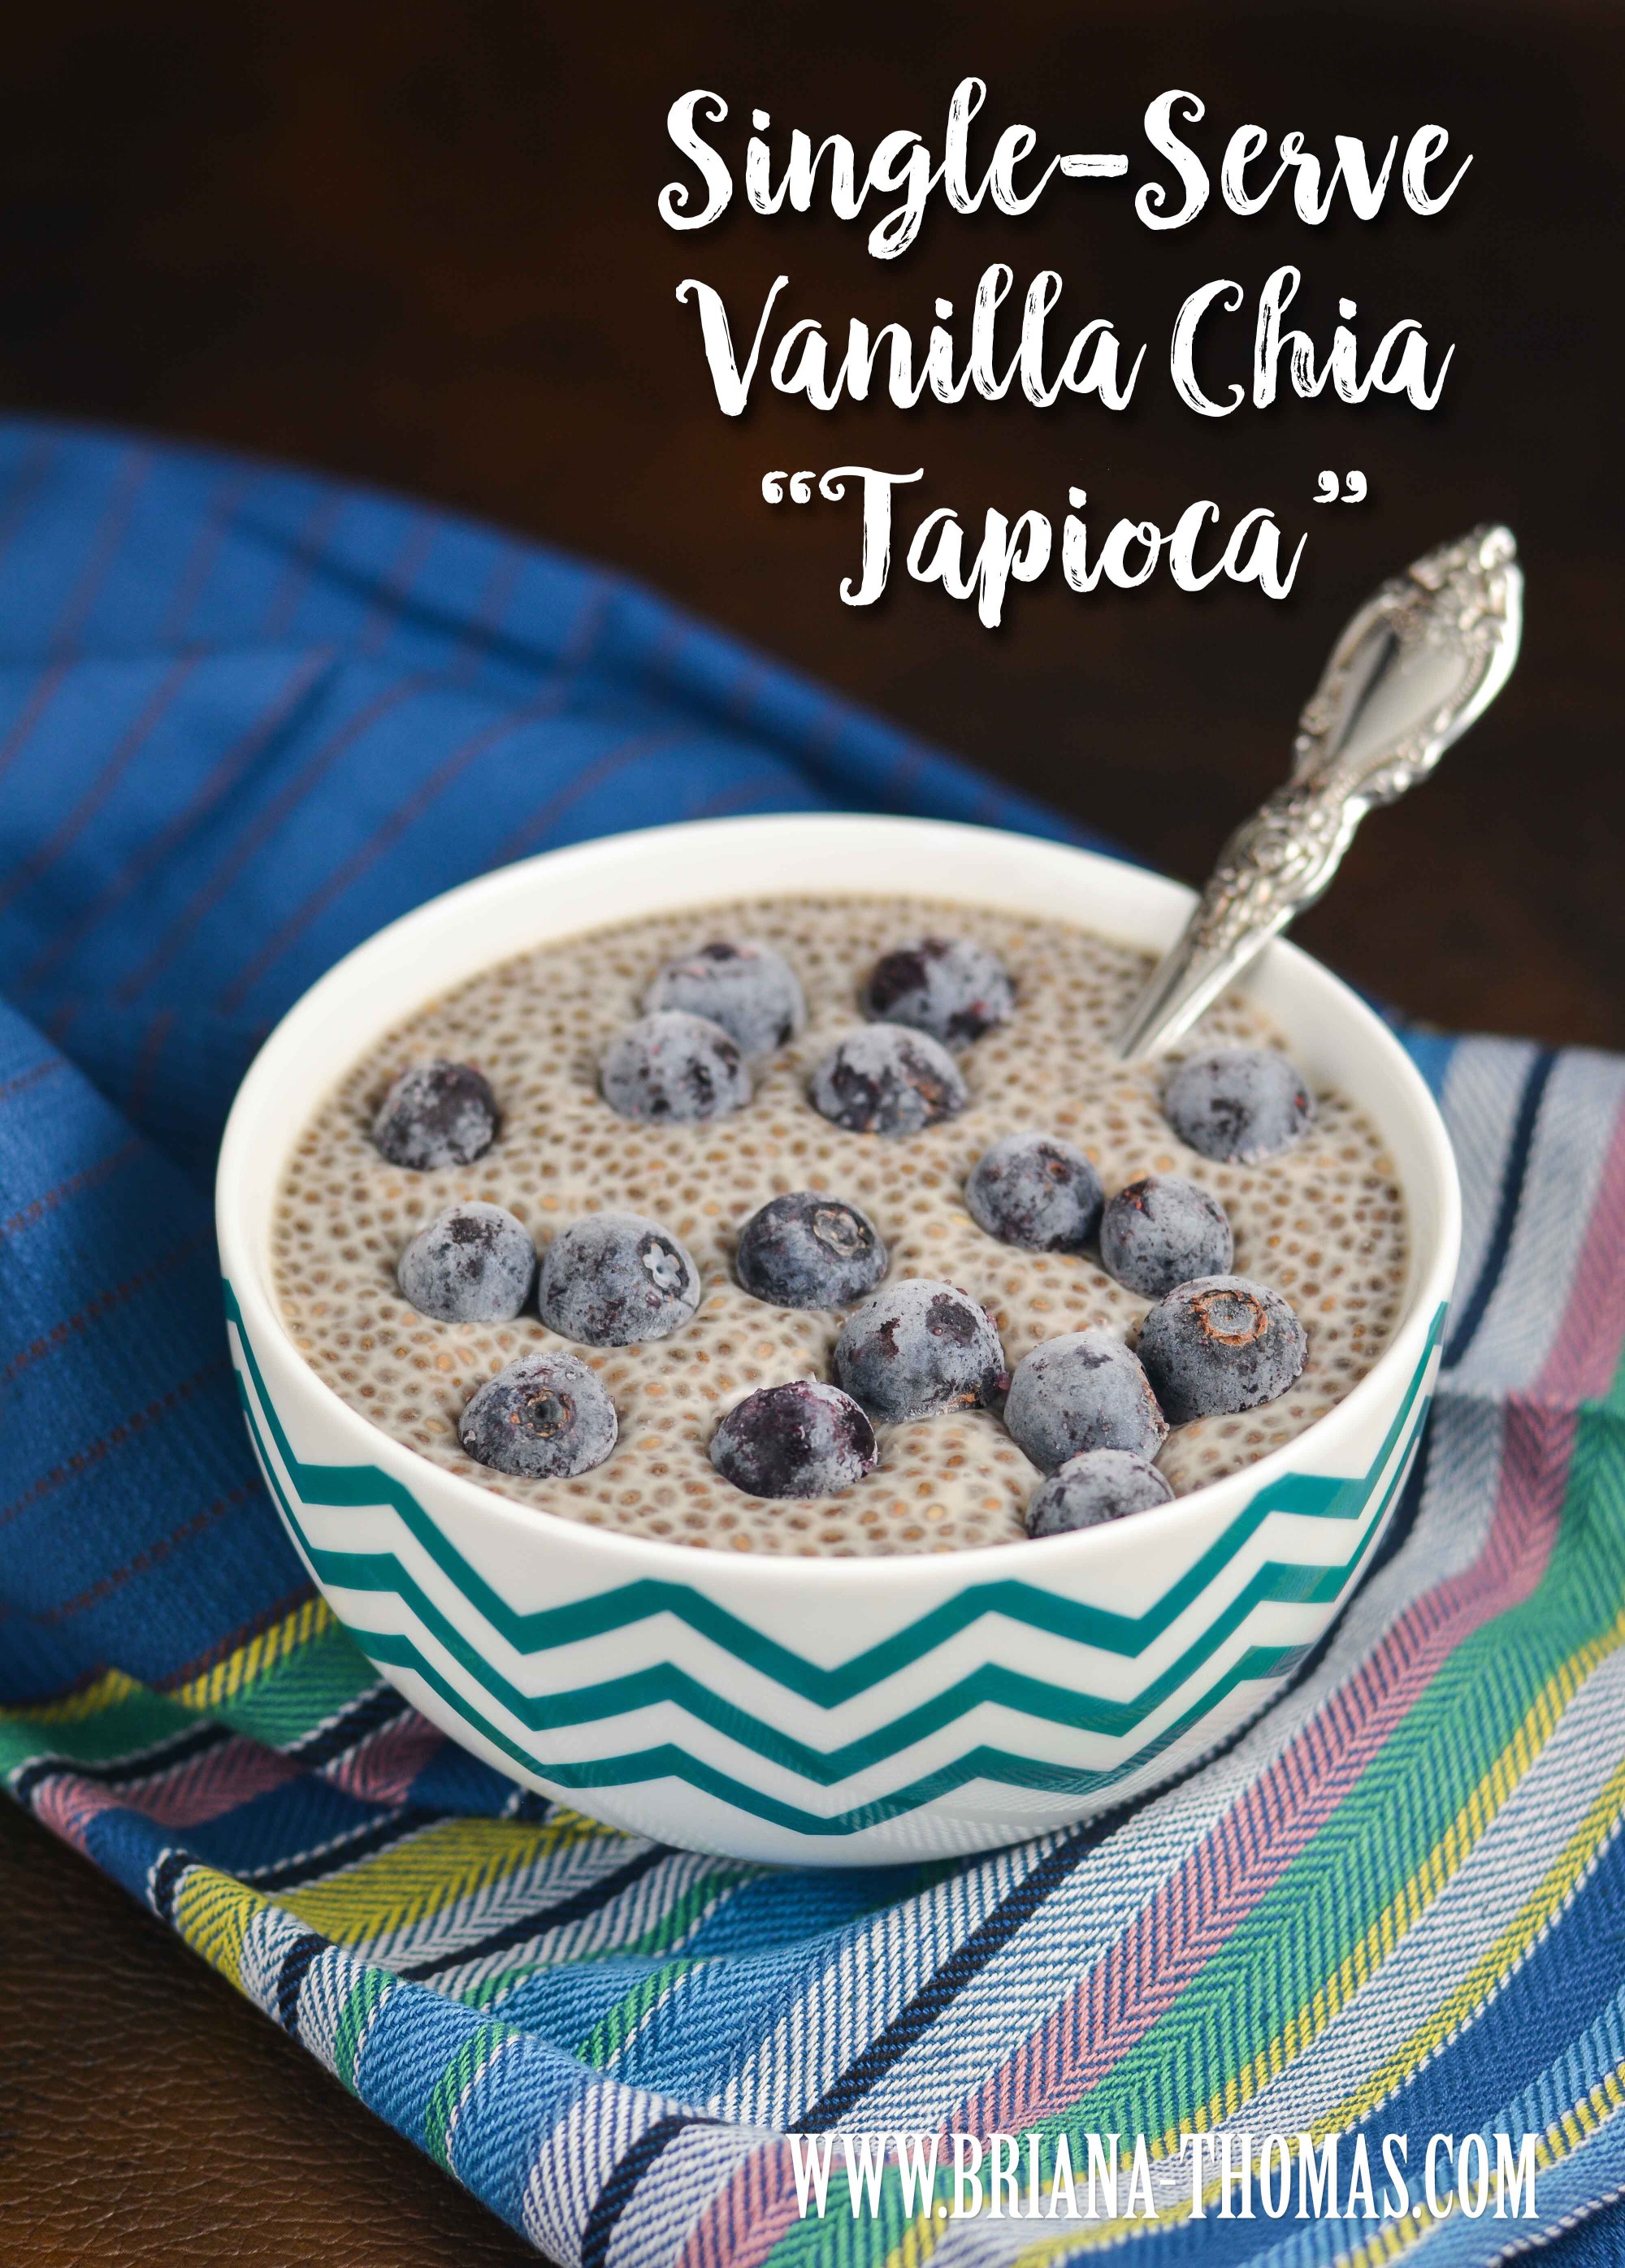 Single-Serve Vanilla Chia "Tapioca" - Healthy Breakfasts for One